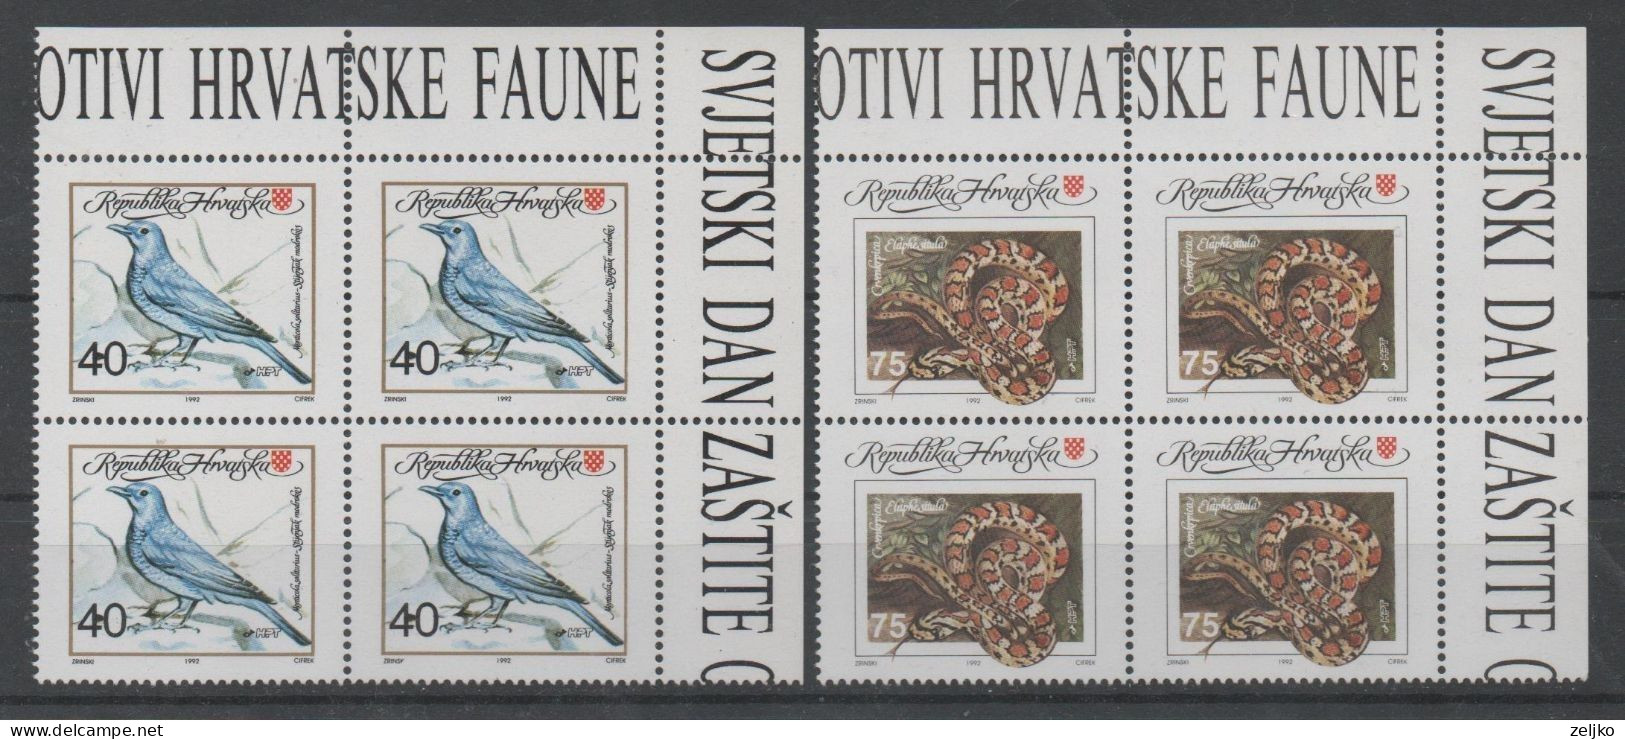 *** Croatia 1992, MNH, Michel 207 - 208, Fauna, Bird, Snake, World Environment Day, 2 Blocks Of 4 Stamps - Croatie